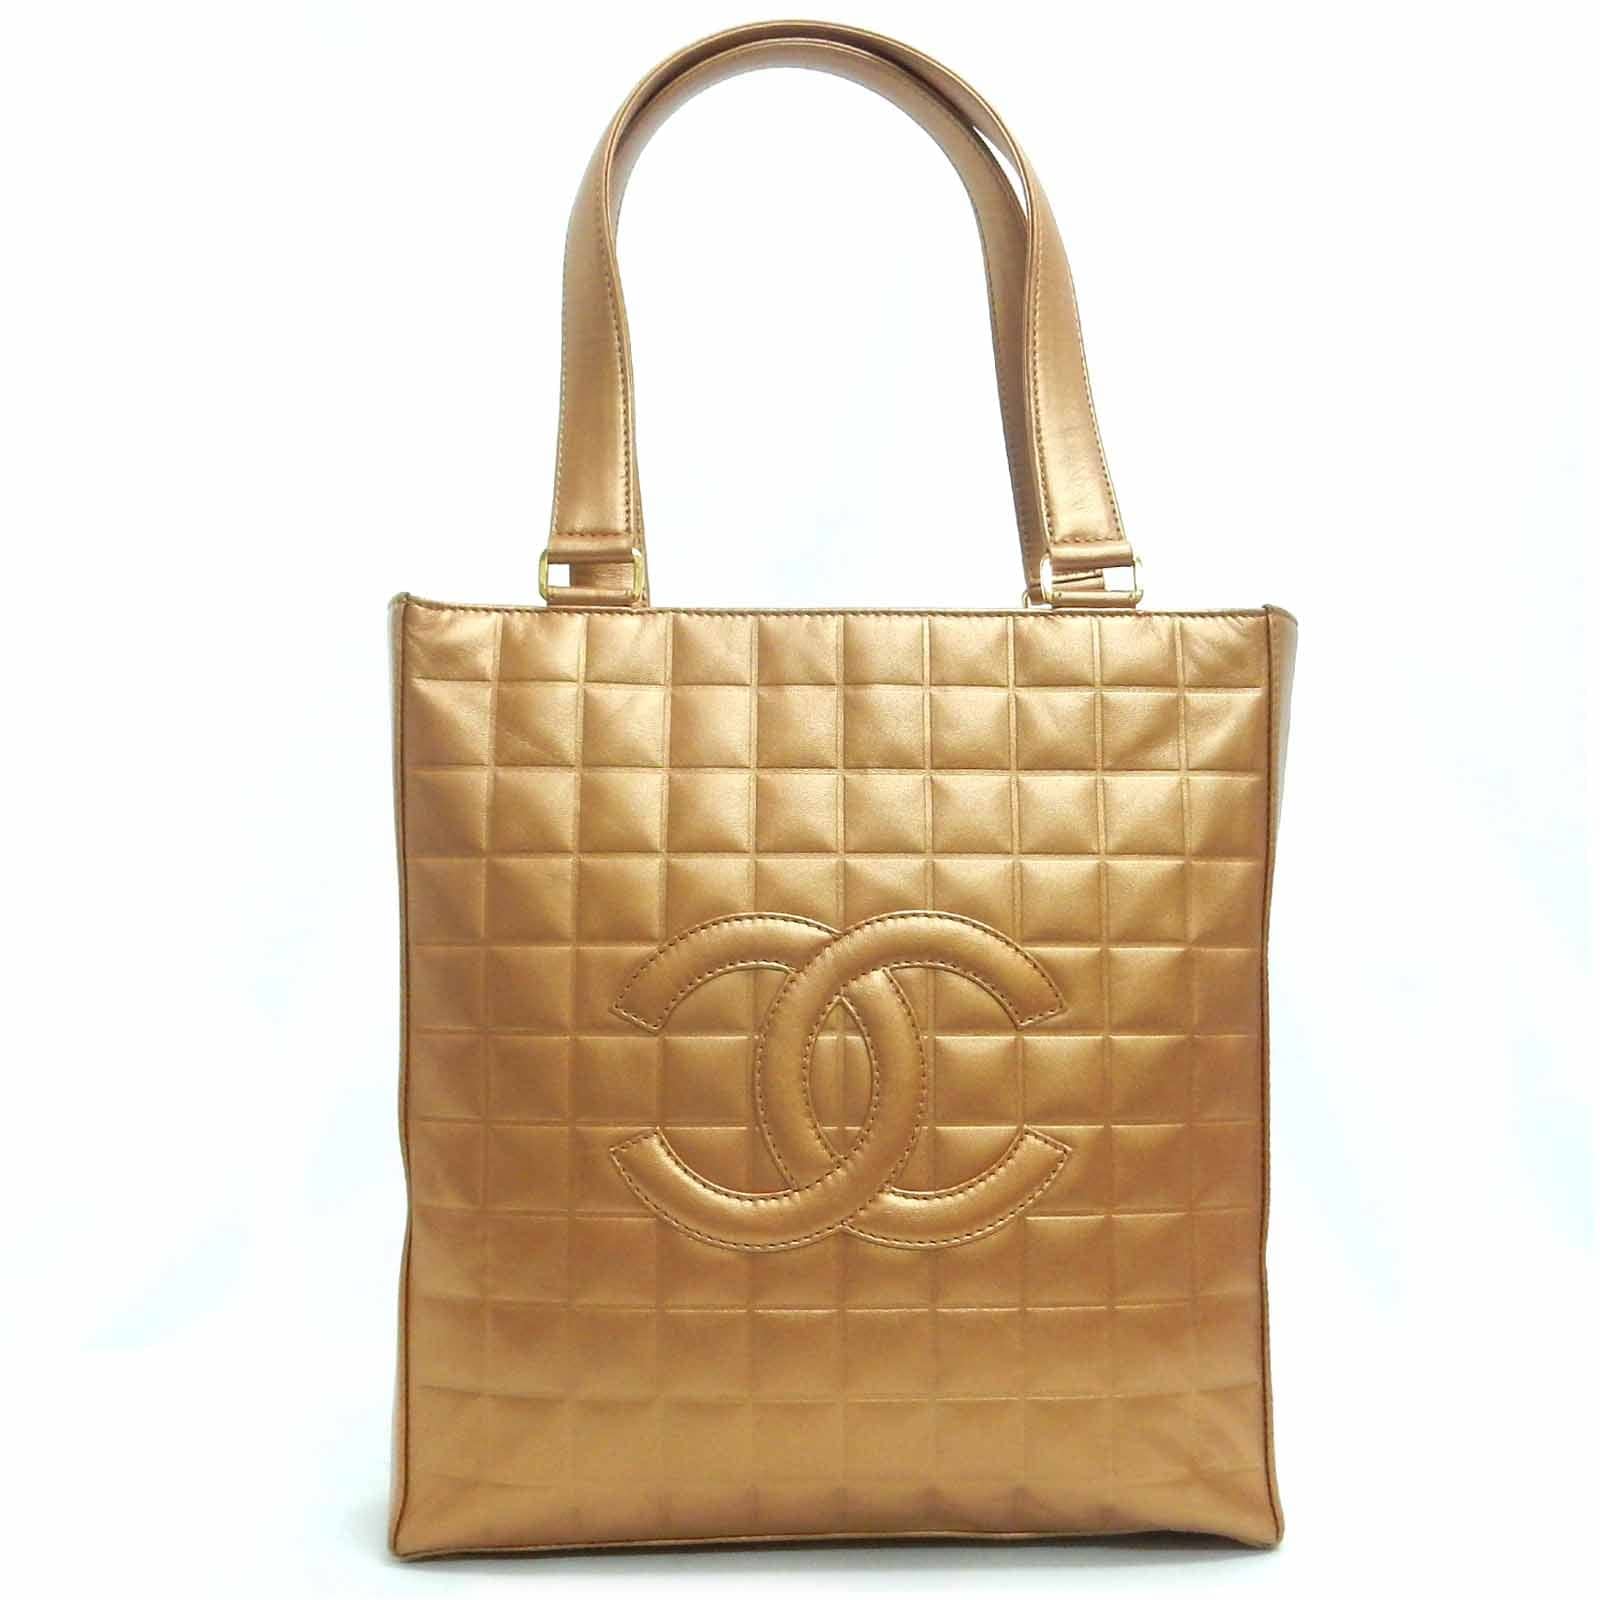 Chanel Tote Bag Gold Beige Metallic | 1,200